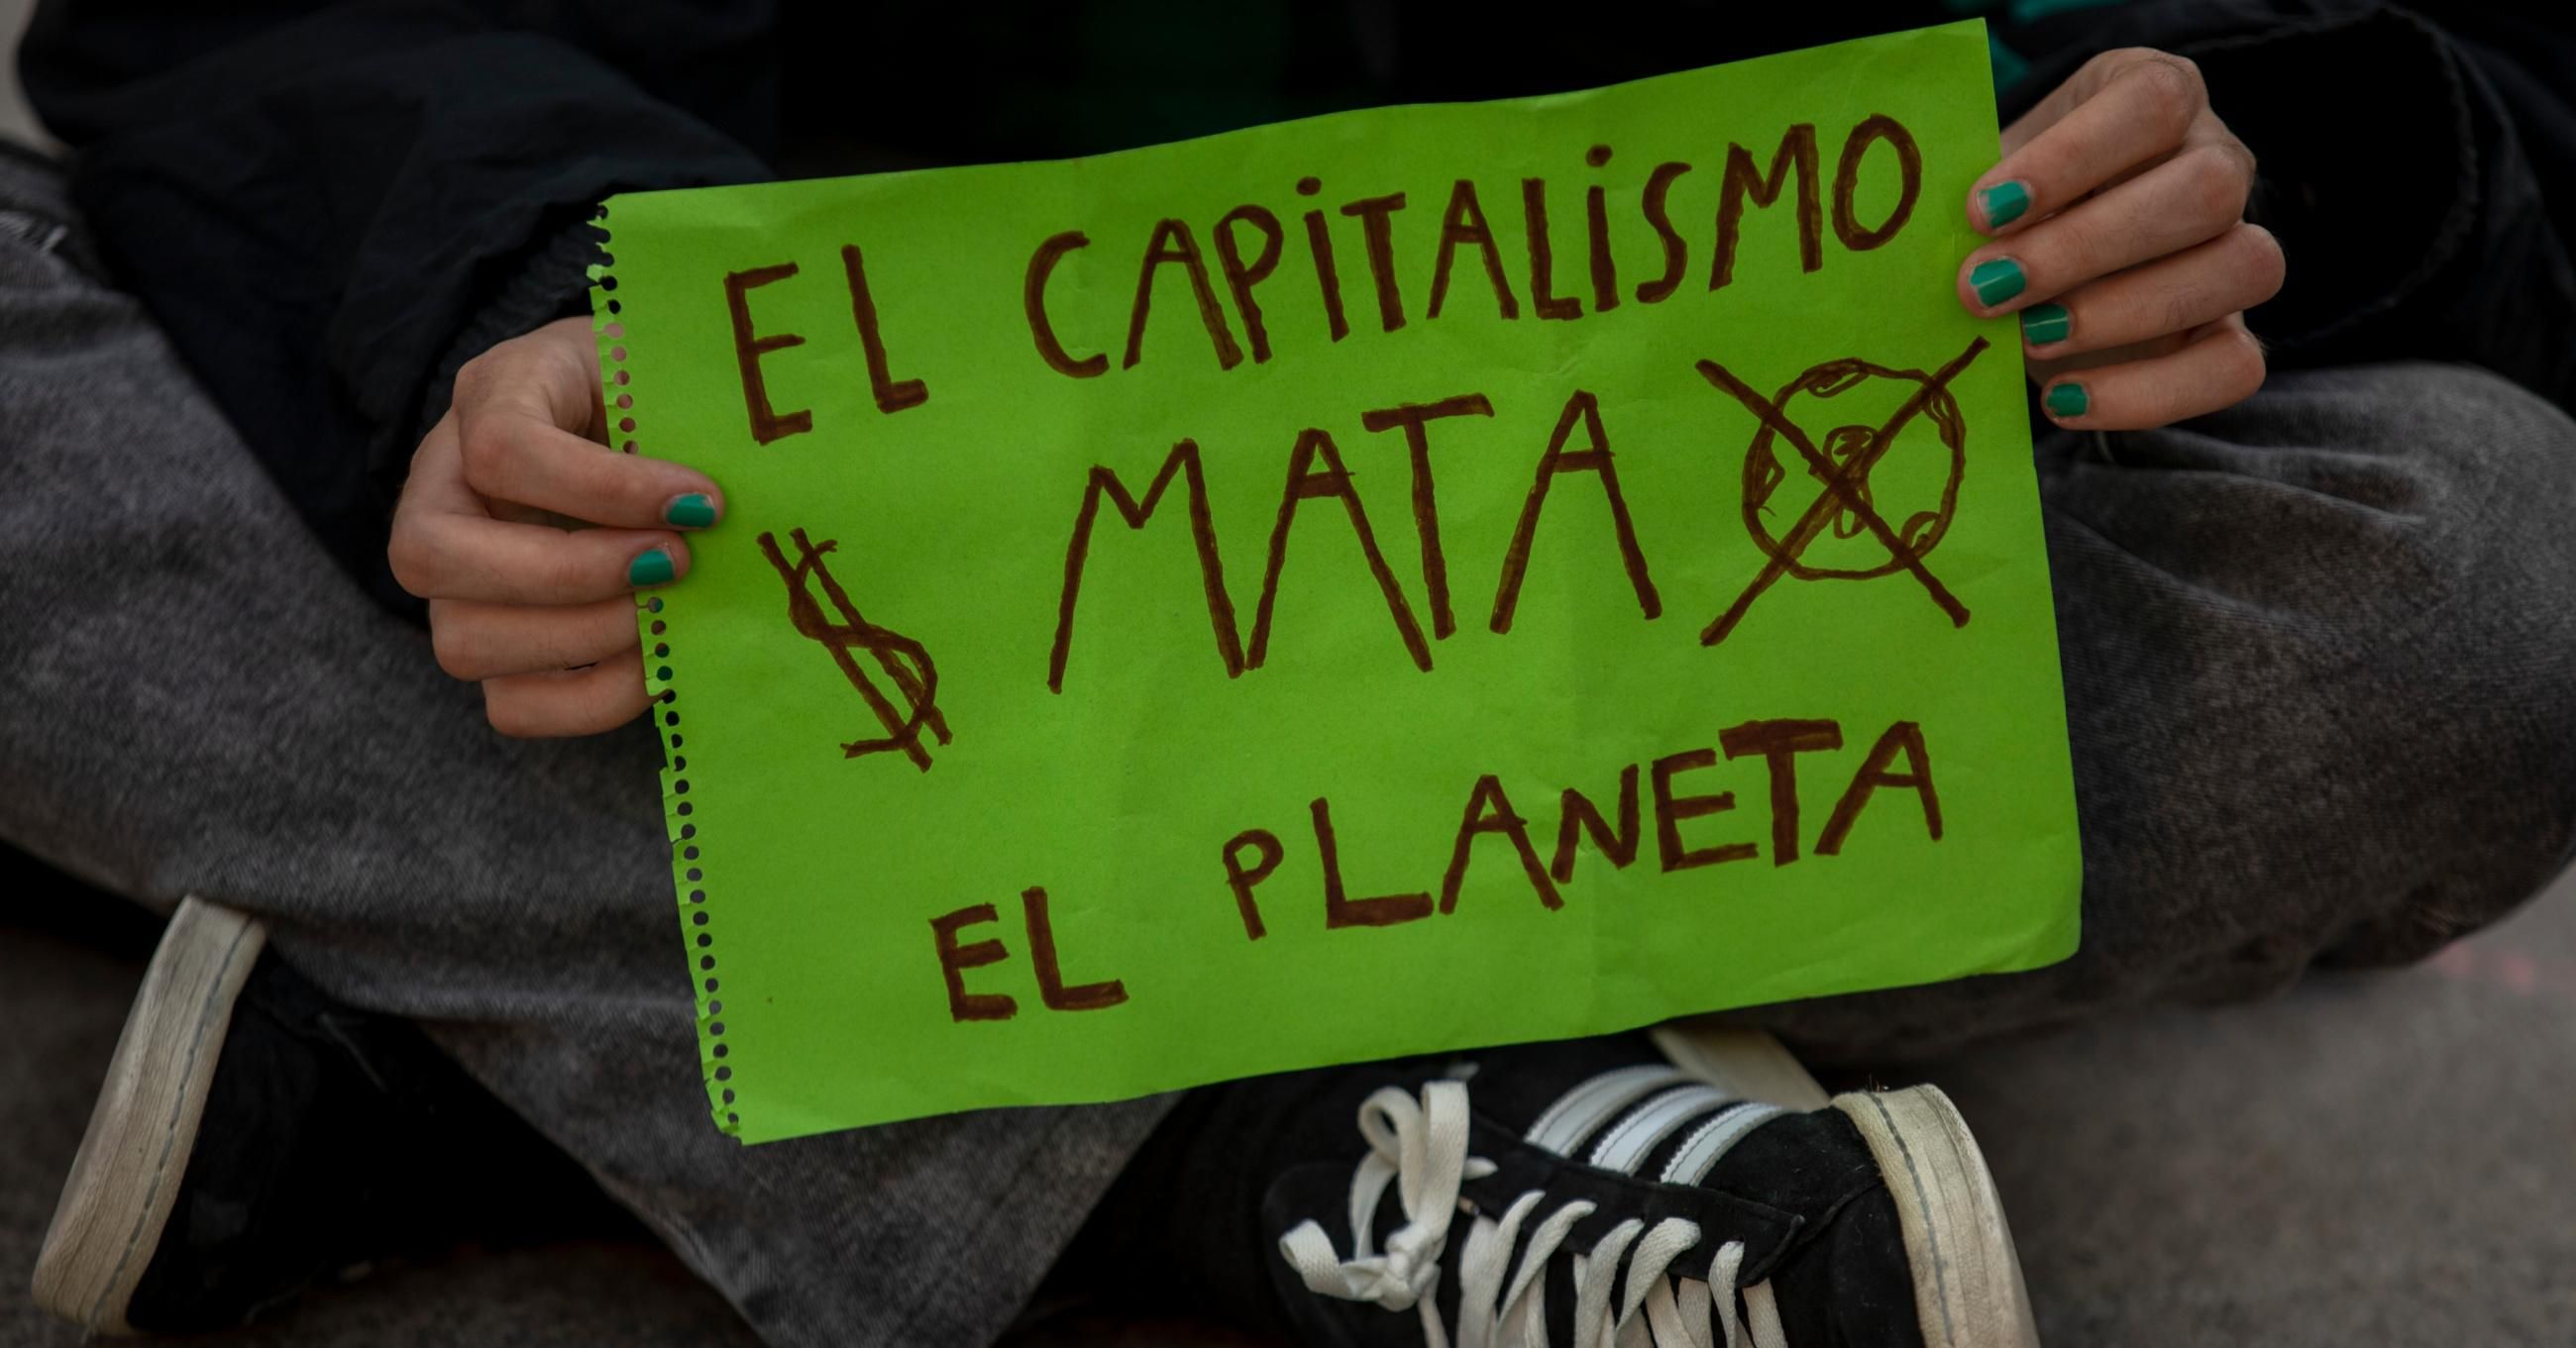 Capitalism kills the planet sign